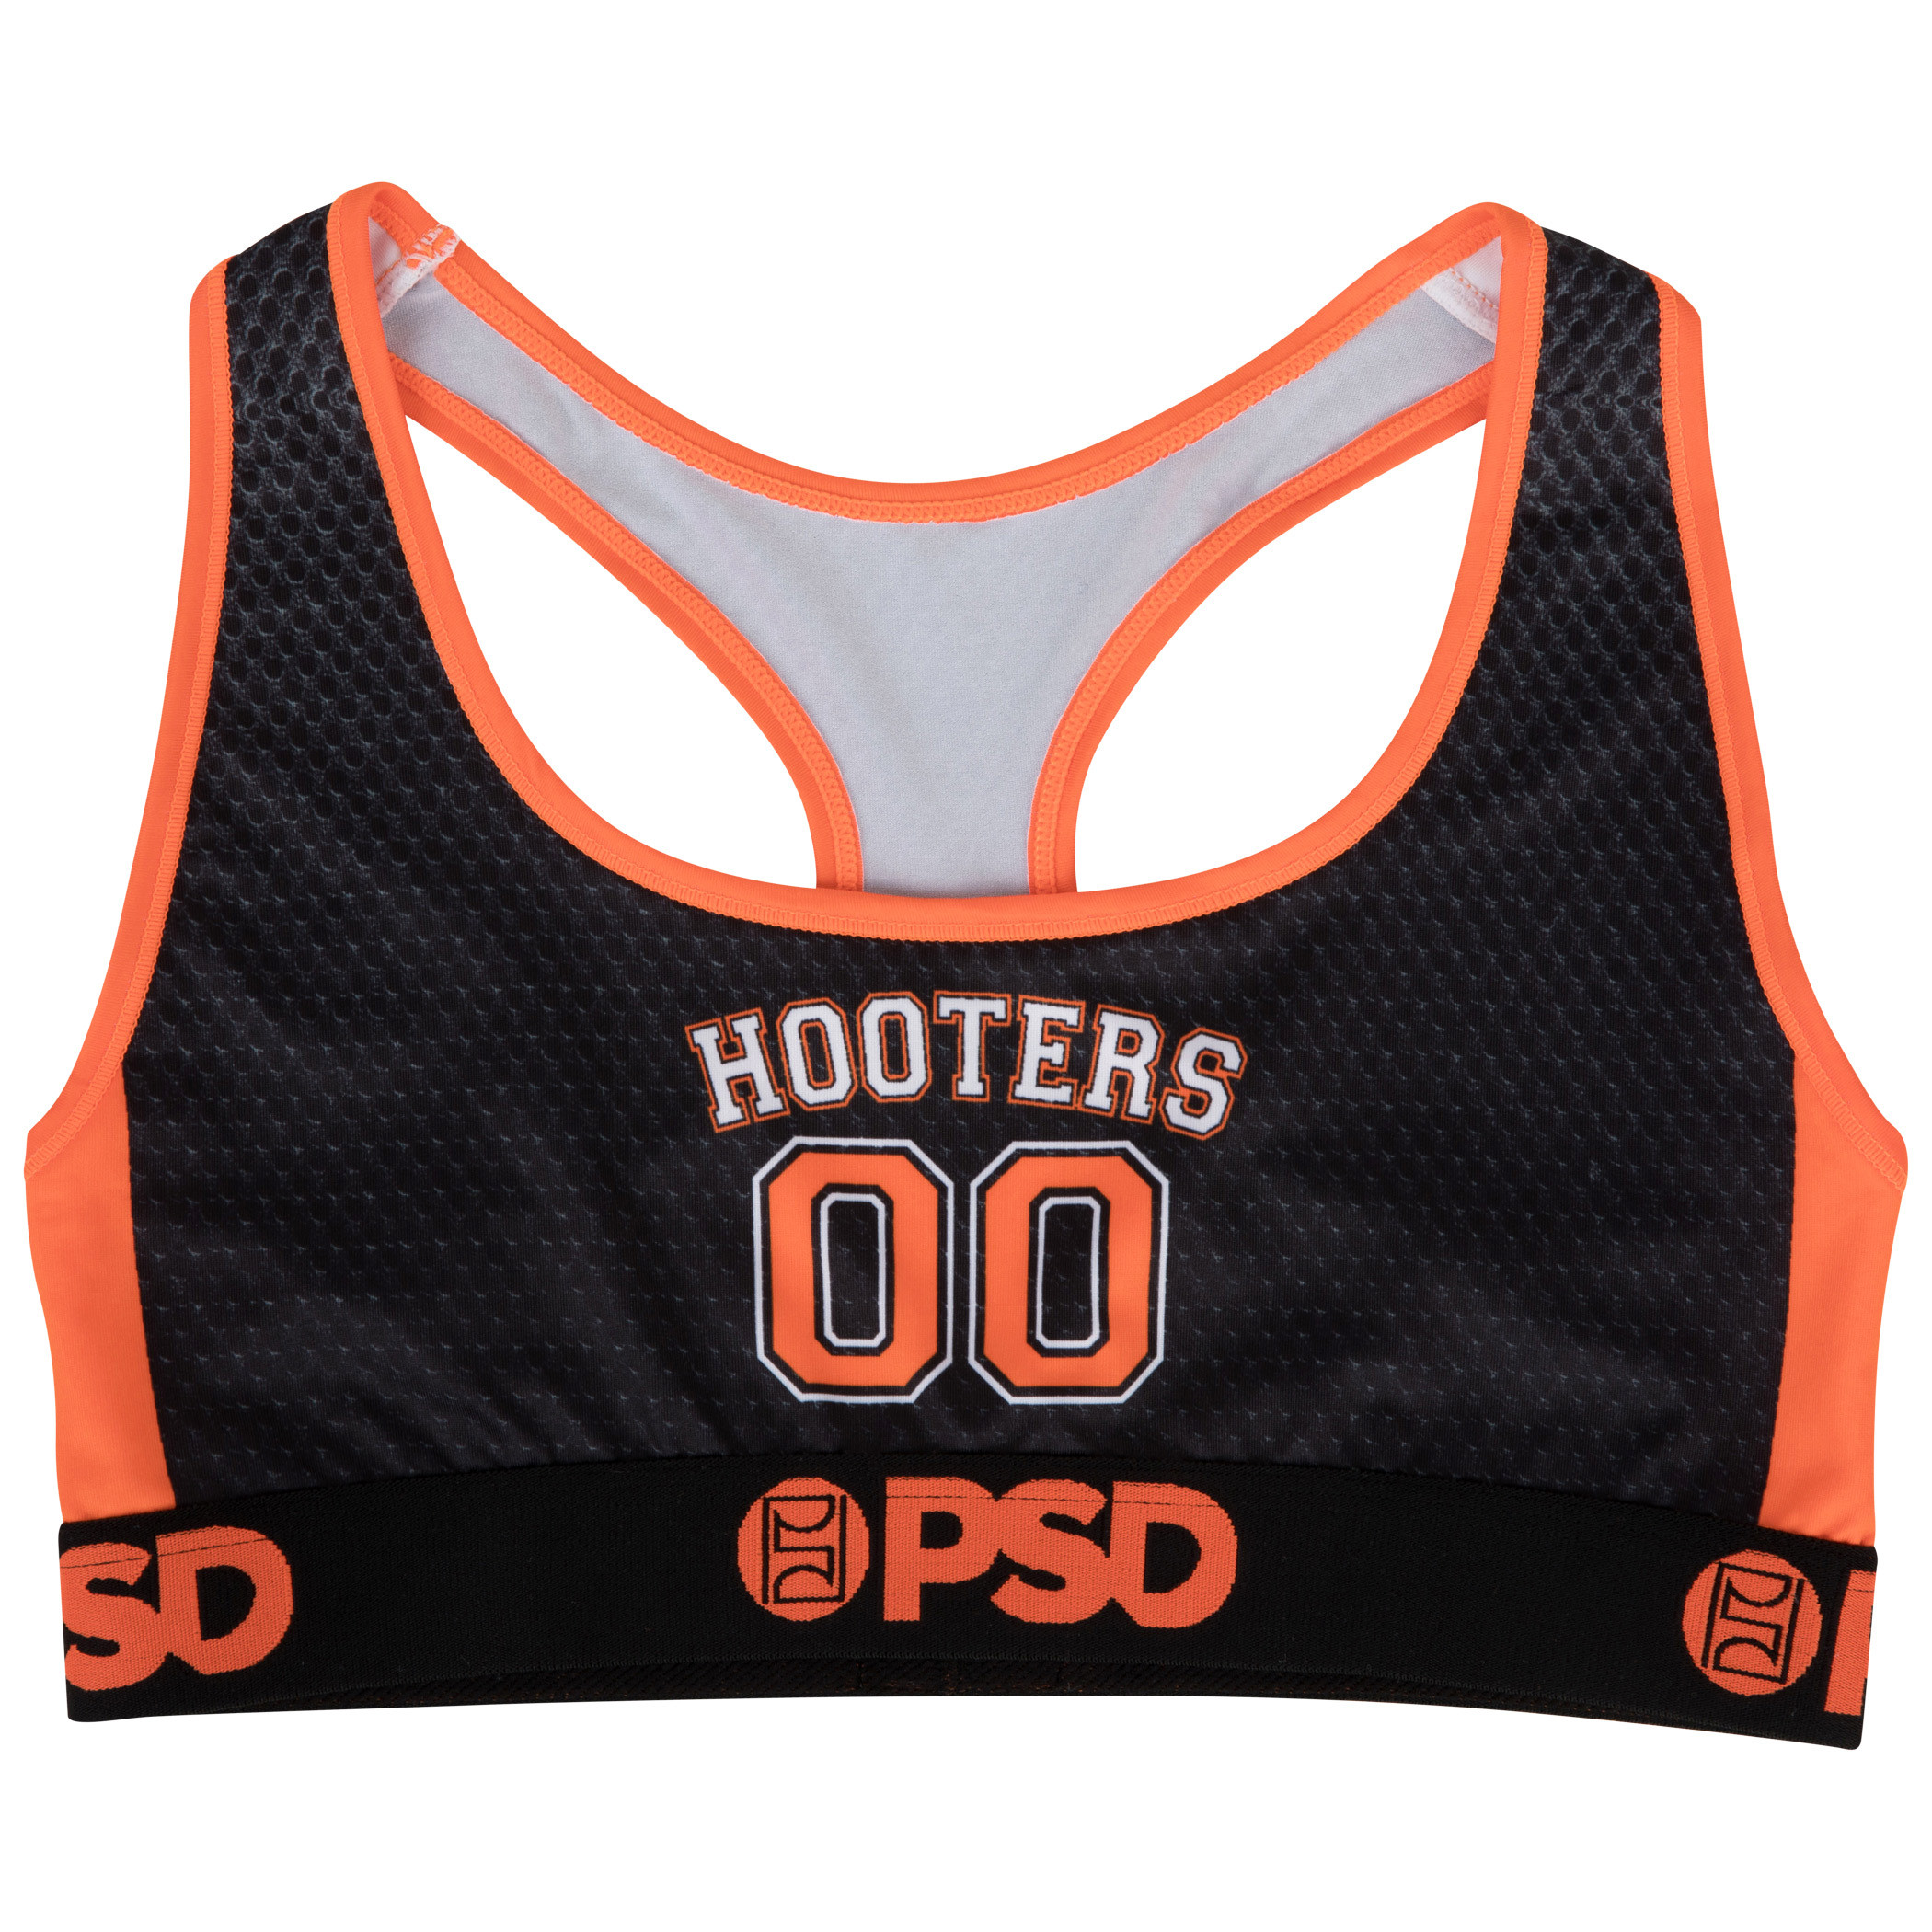 Hooters Restaurant Game Day Uniform PSD Sports Bra